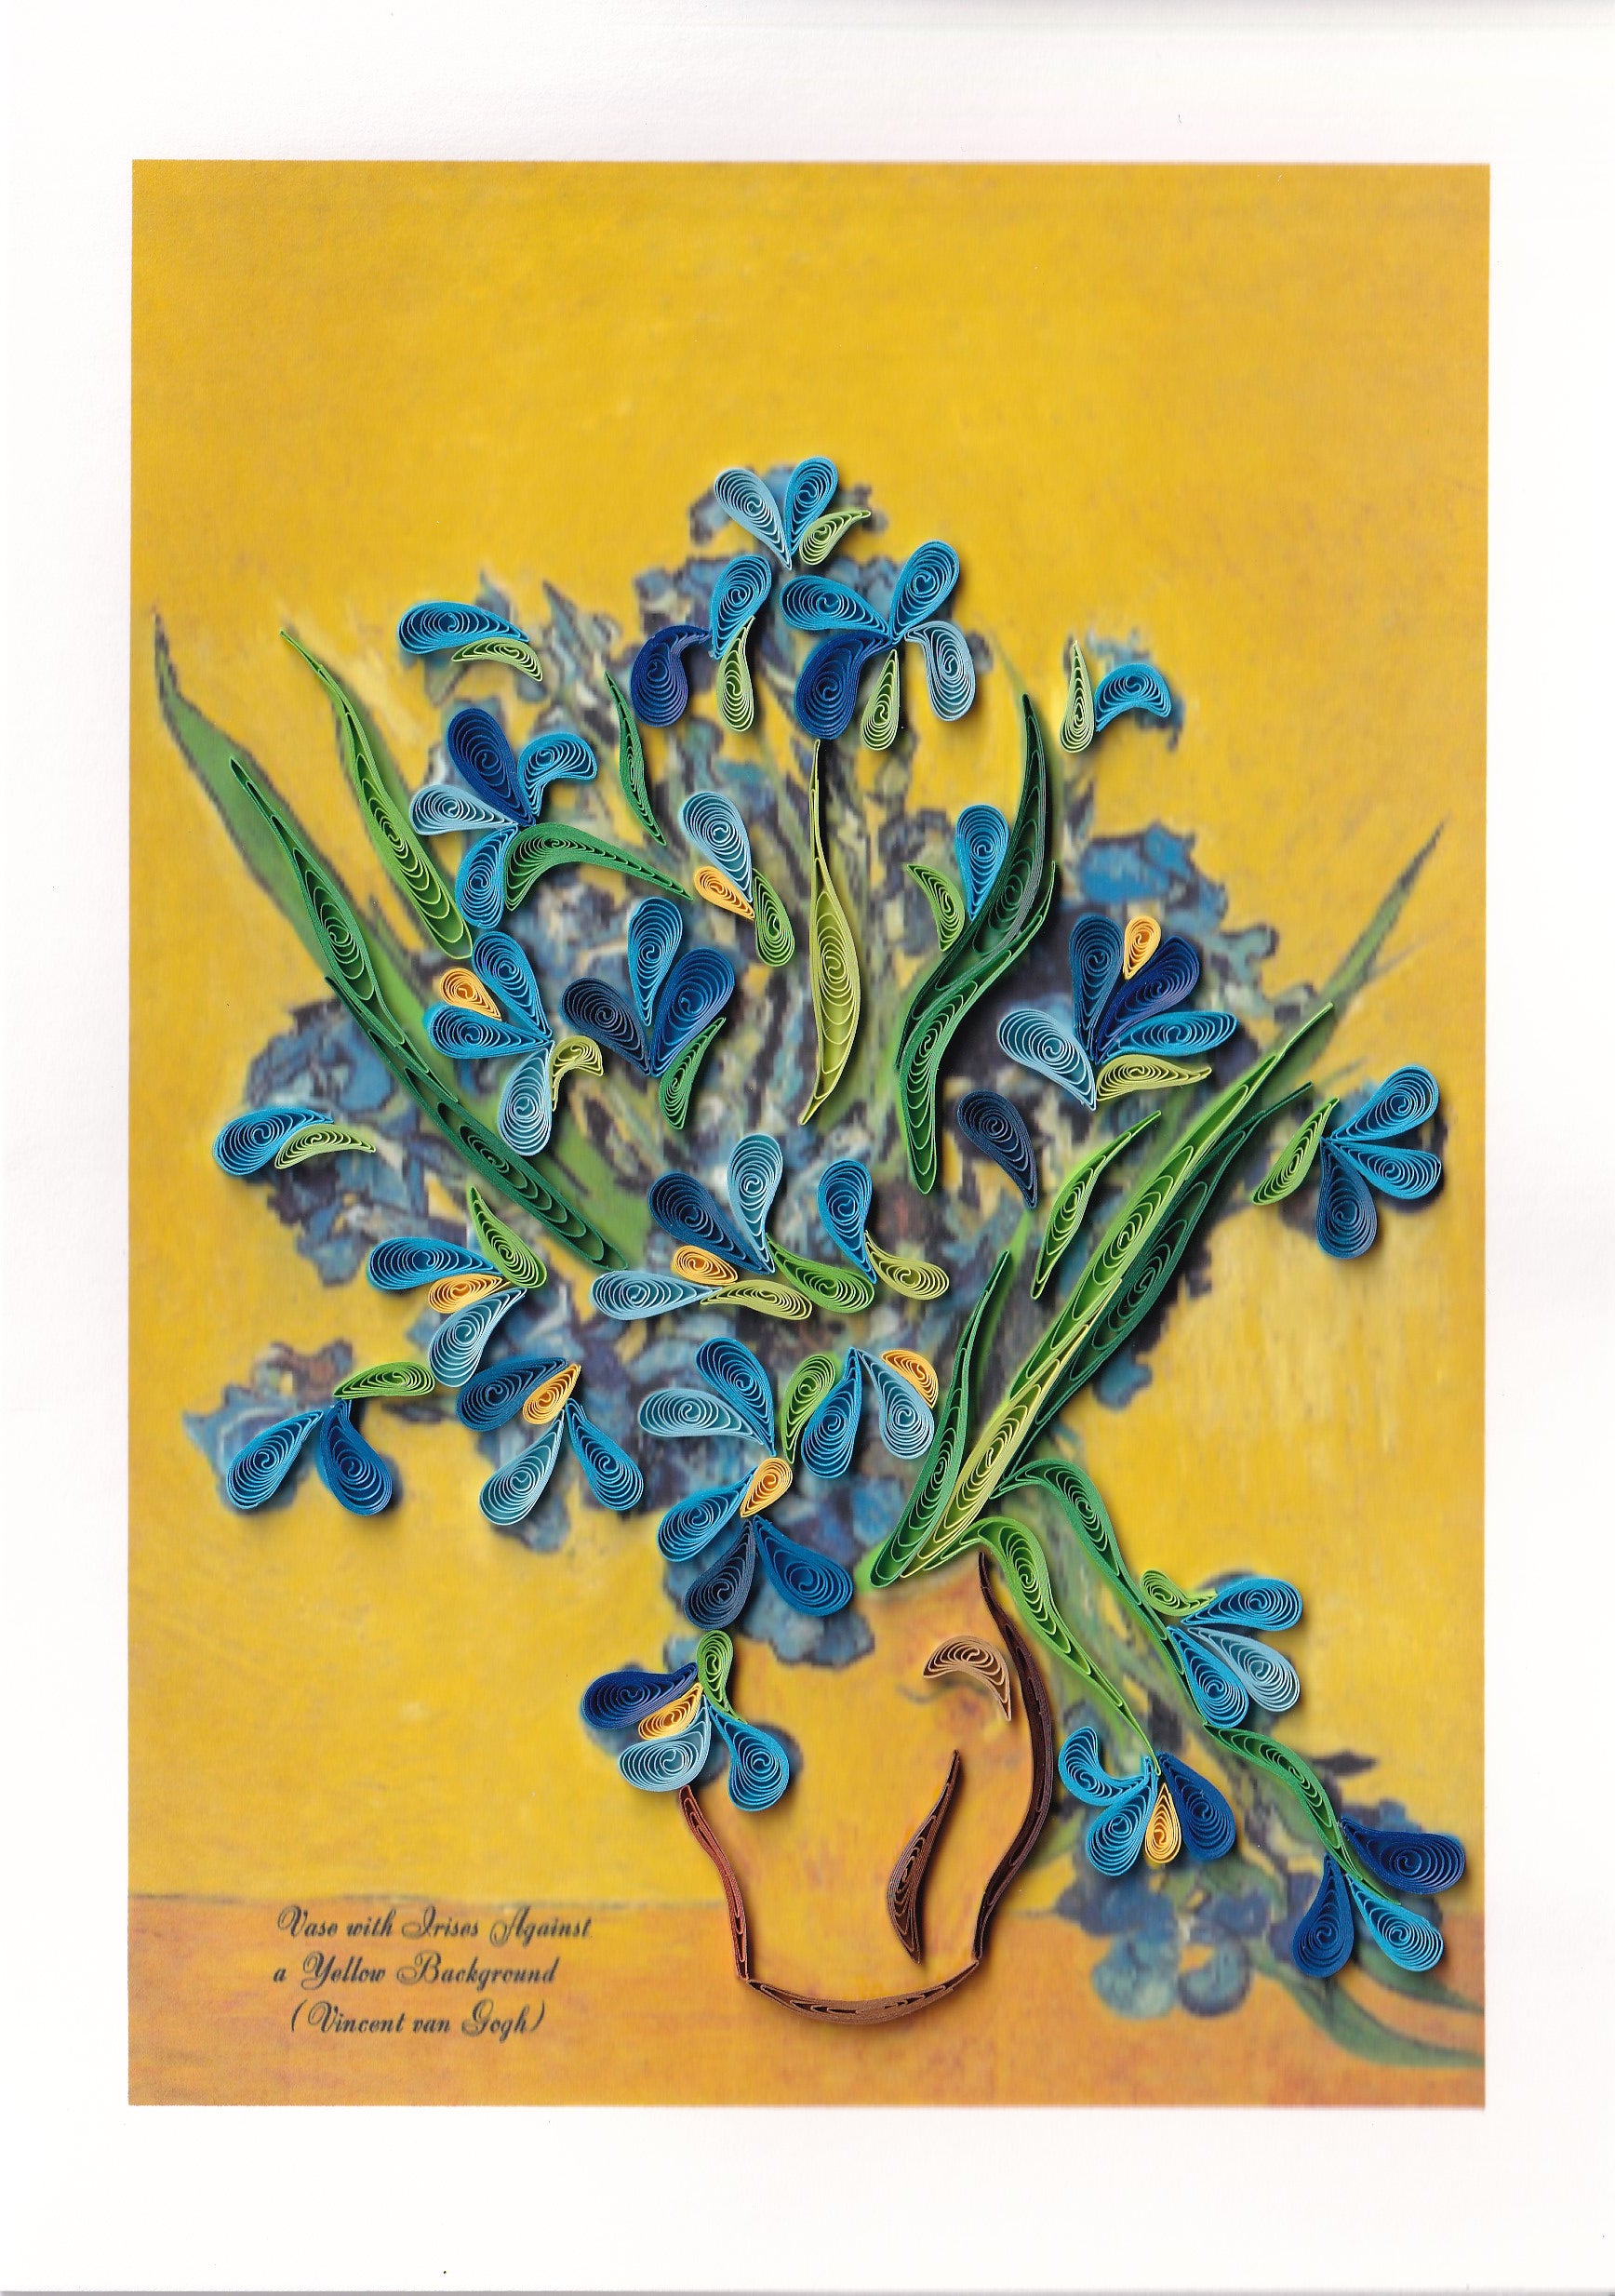 Artist Series - Quilled Starry Night, Van Gogh Card